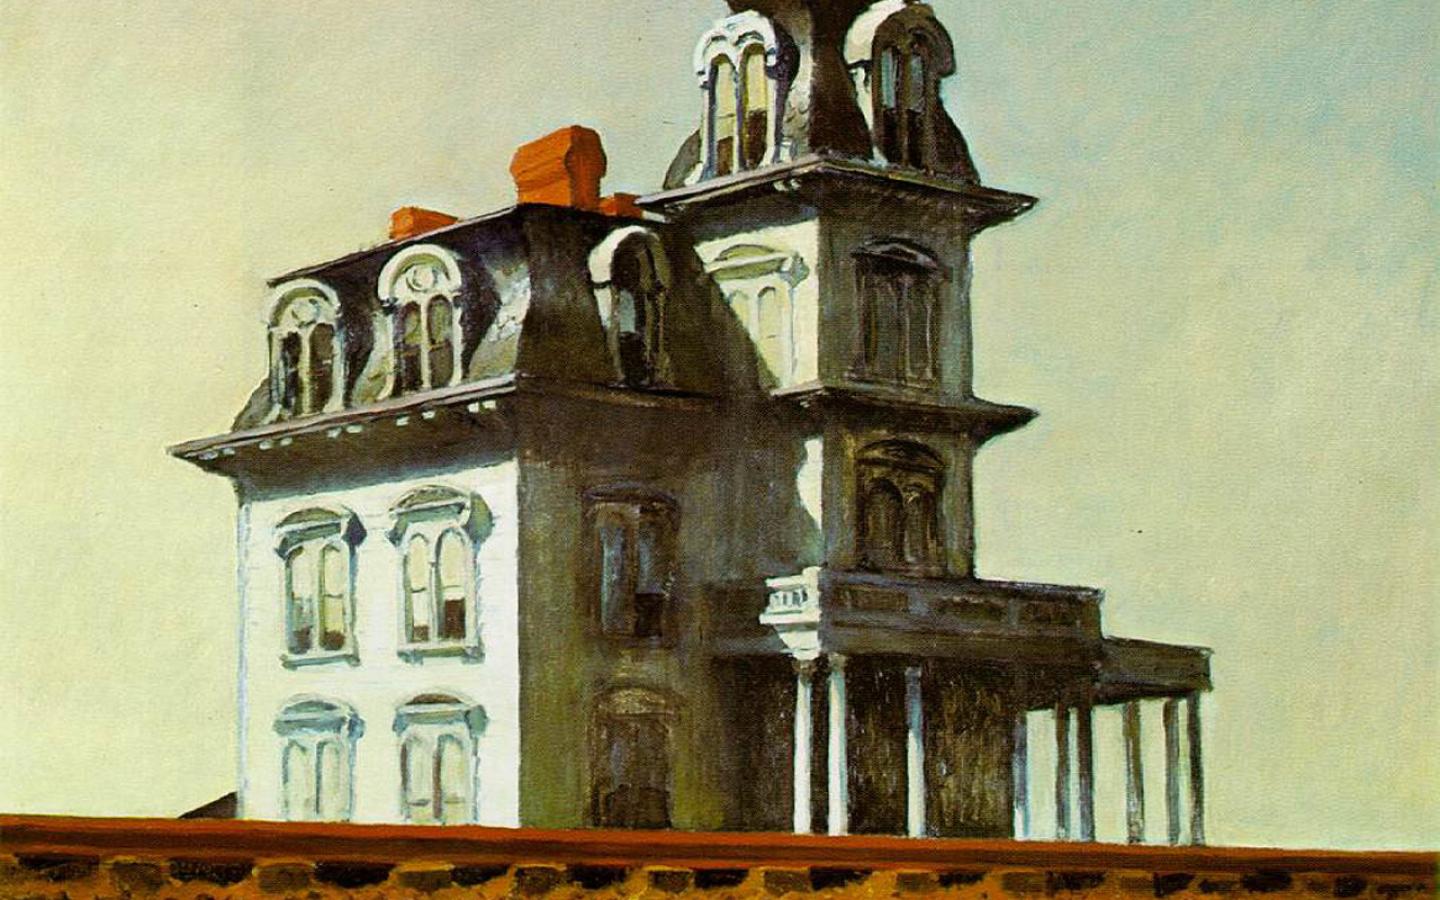 Edward Hopper - House Behind The Railroad (1925) Wallpaper #1 1440 x 900 